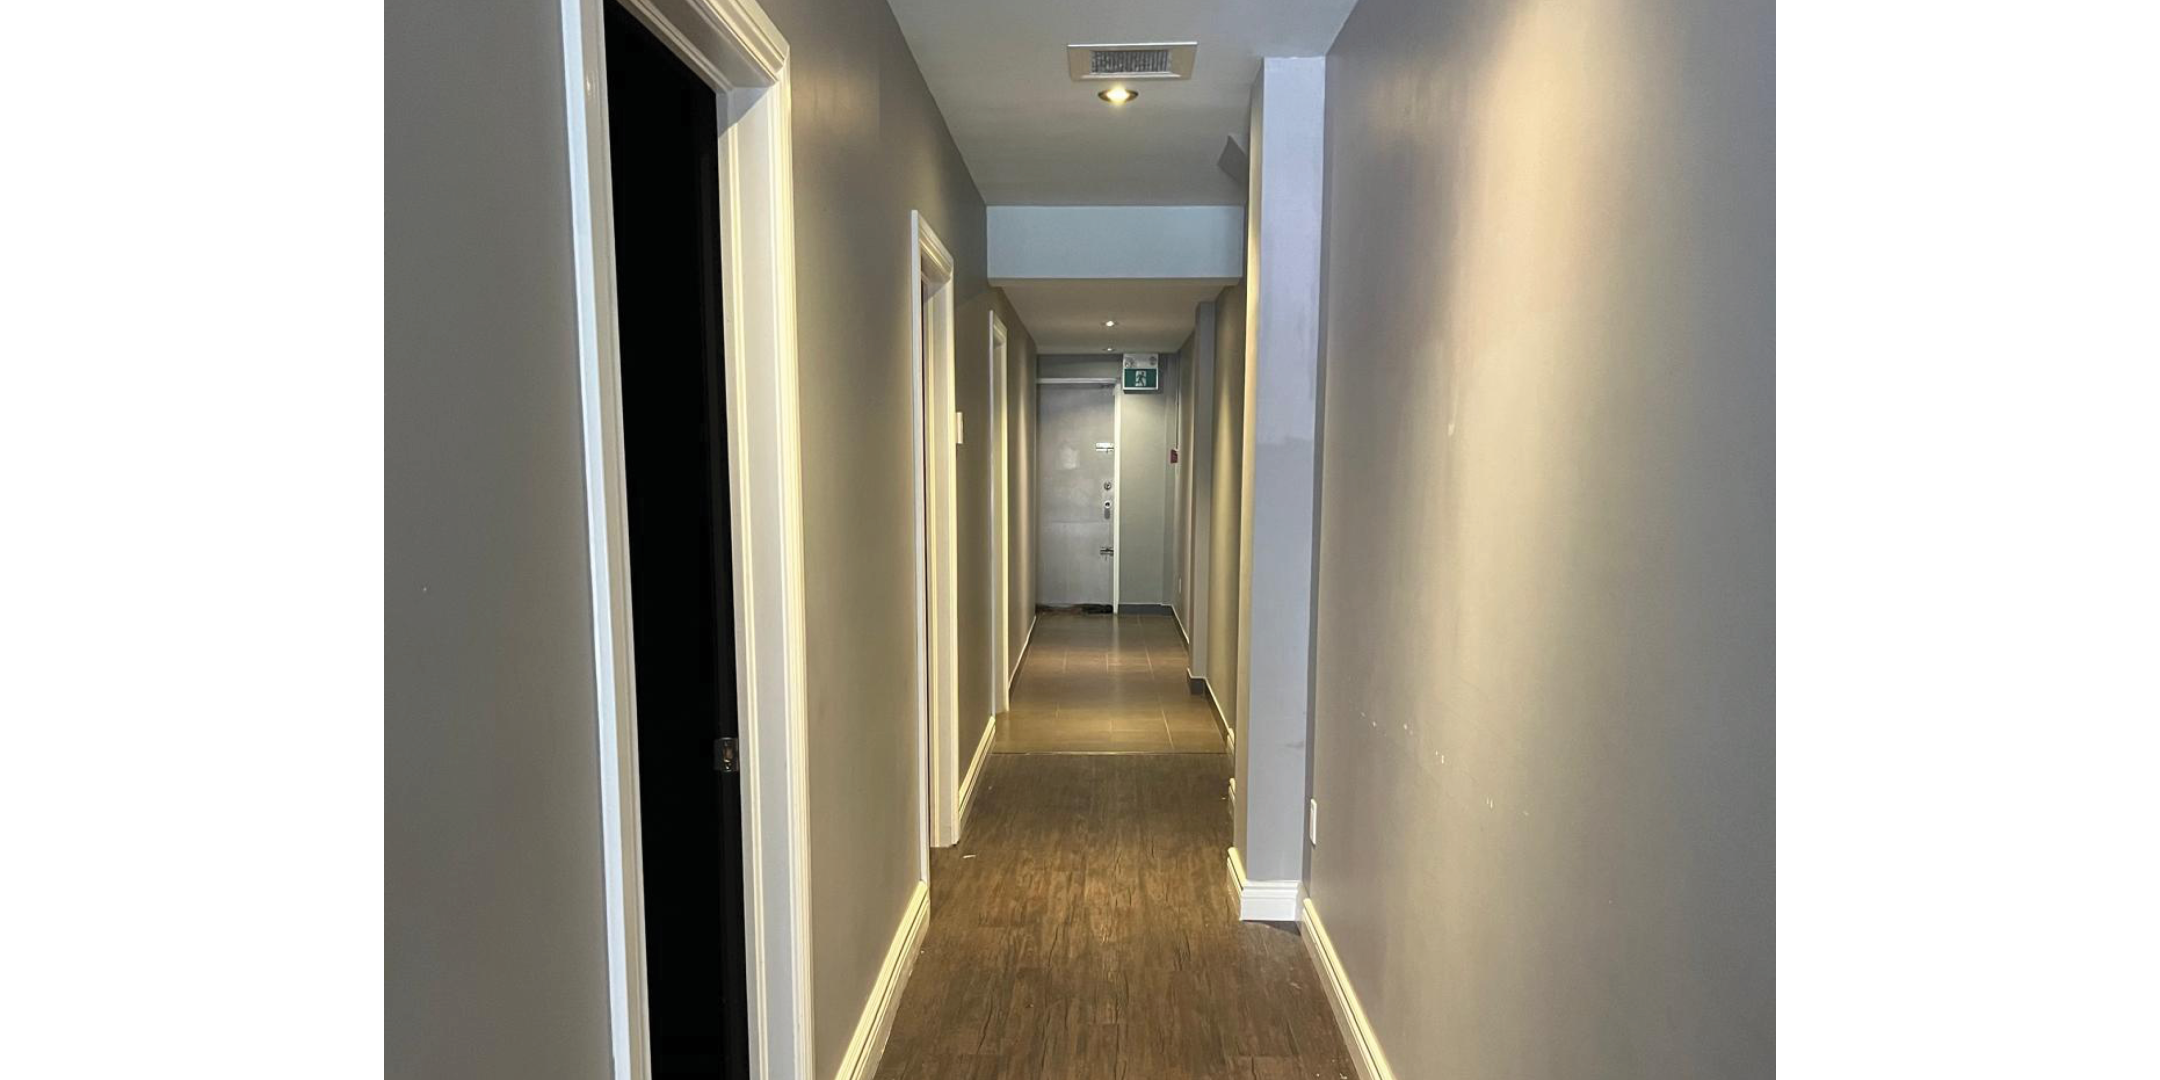 Hallway with lights and doors